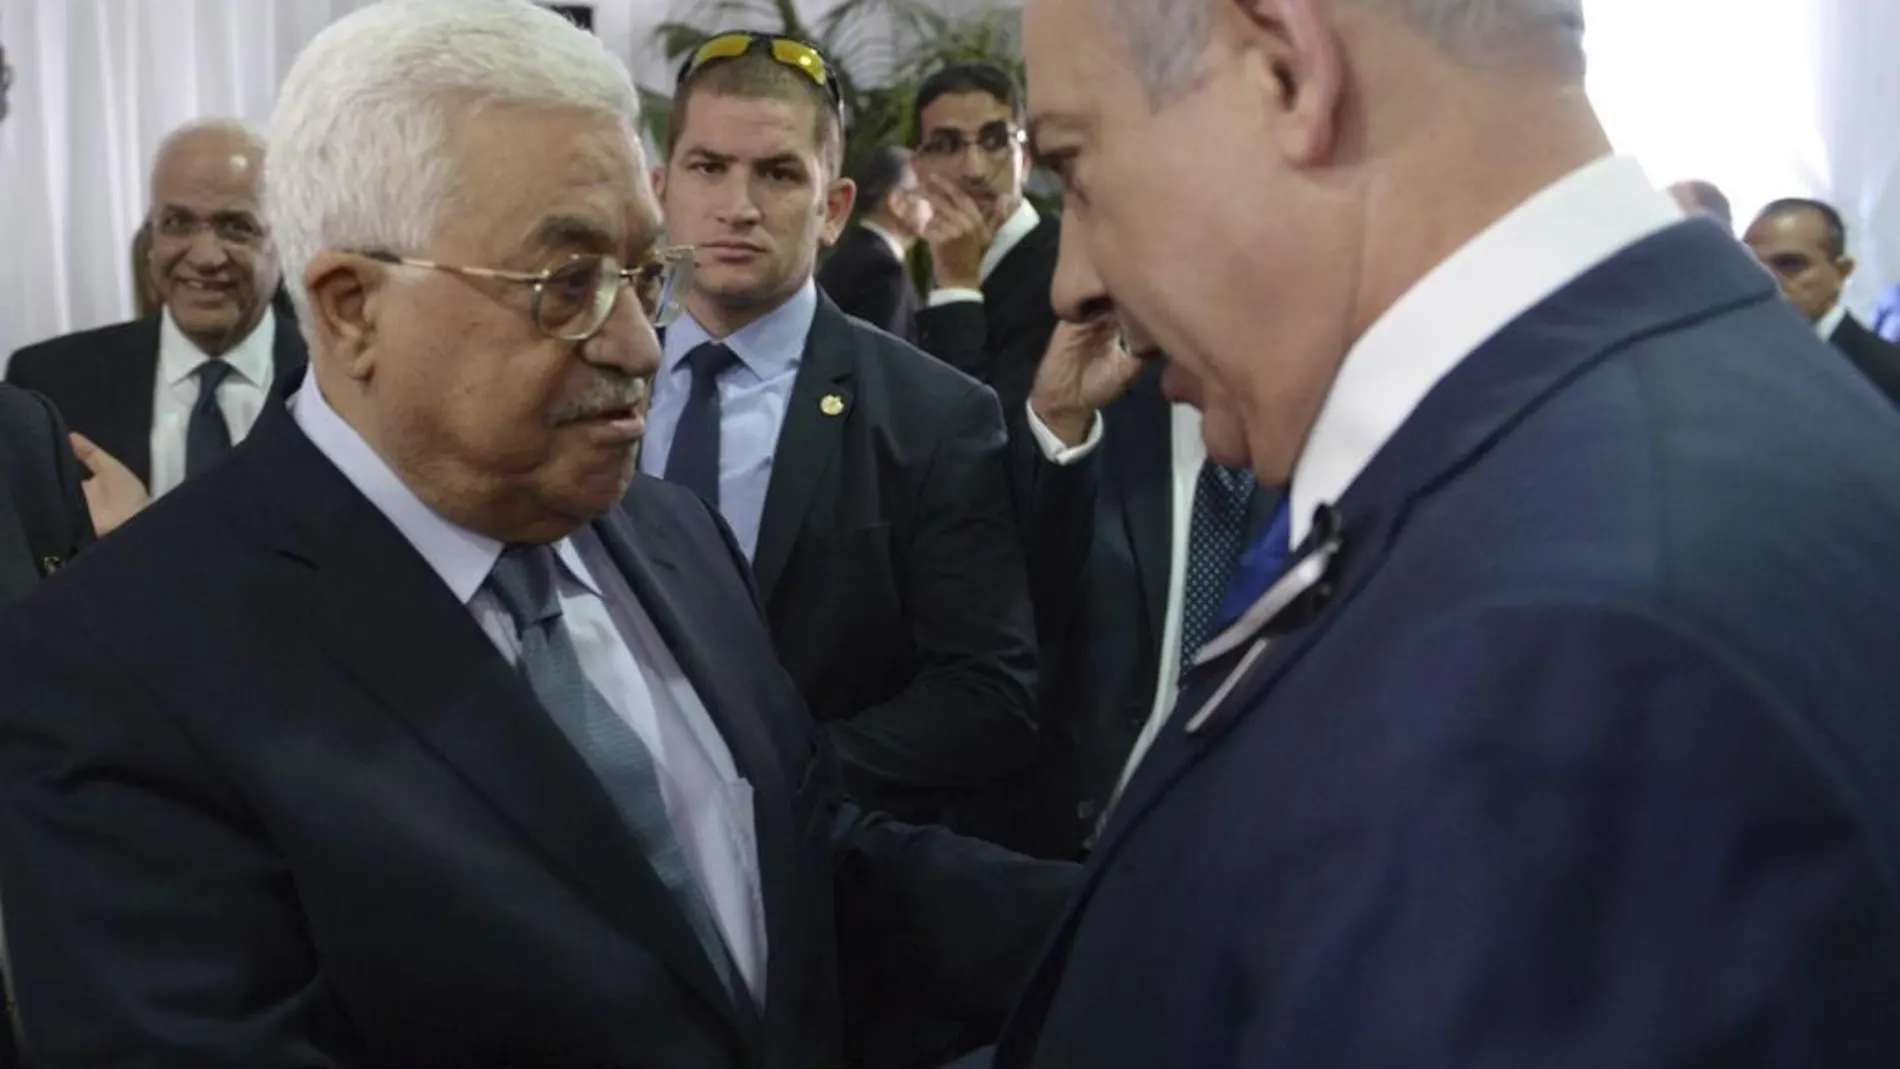 El primer ministro israelí, Benjamin Netanyahu, saluda al presidente palestino, Mahmud Abás